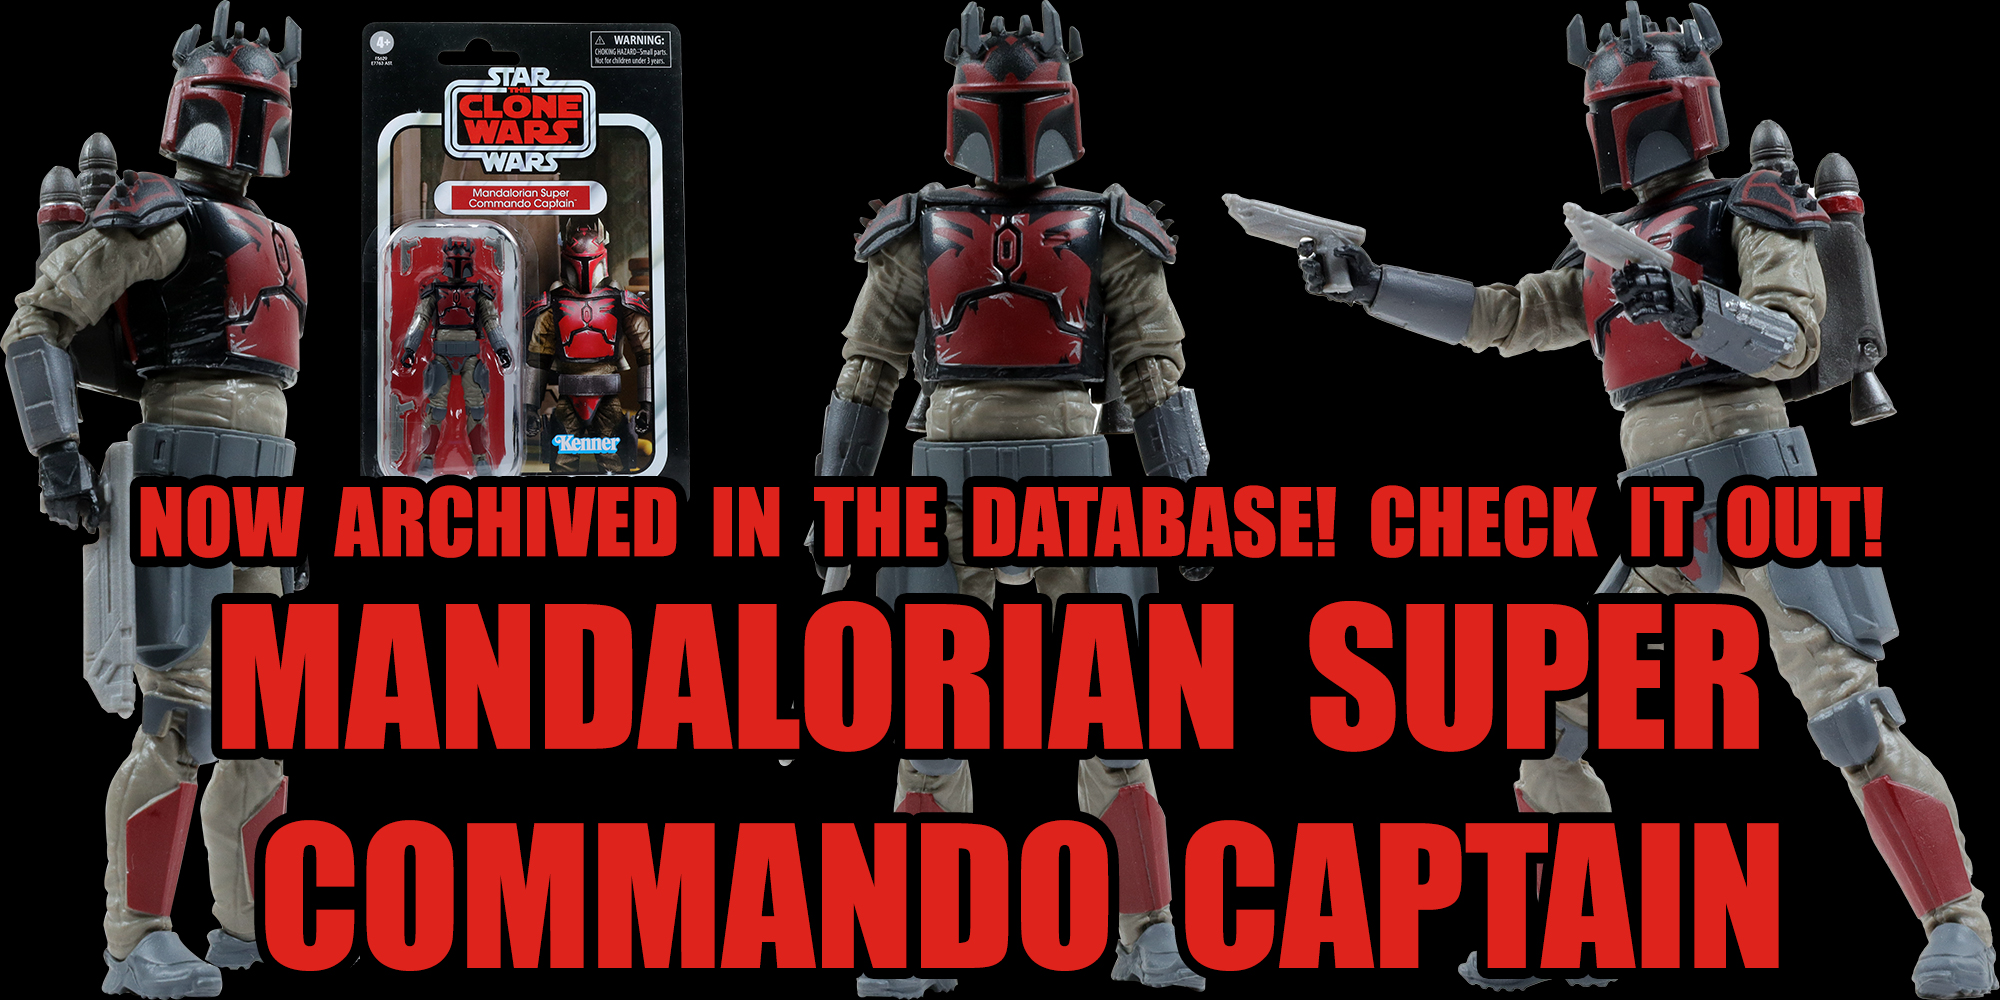 Mandalorian Super Commando Captain